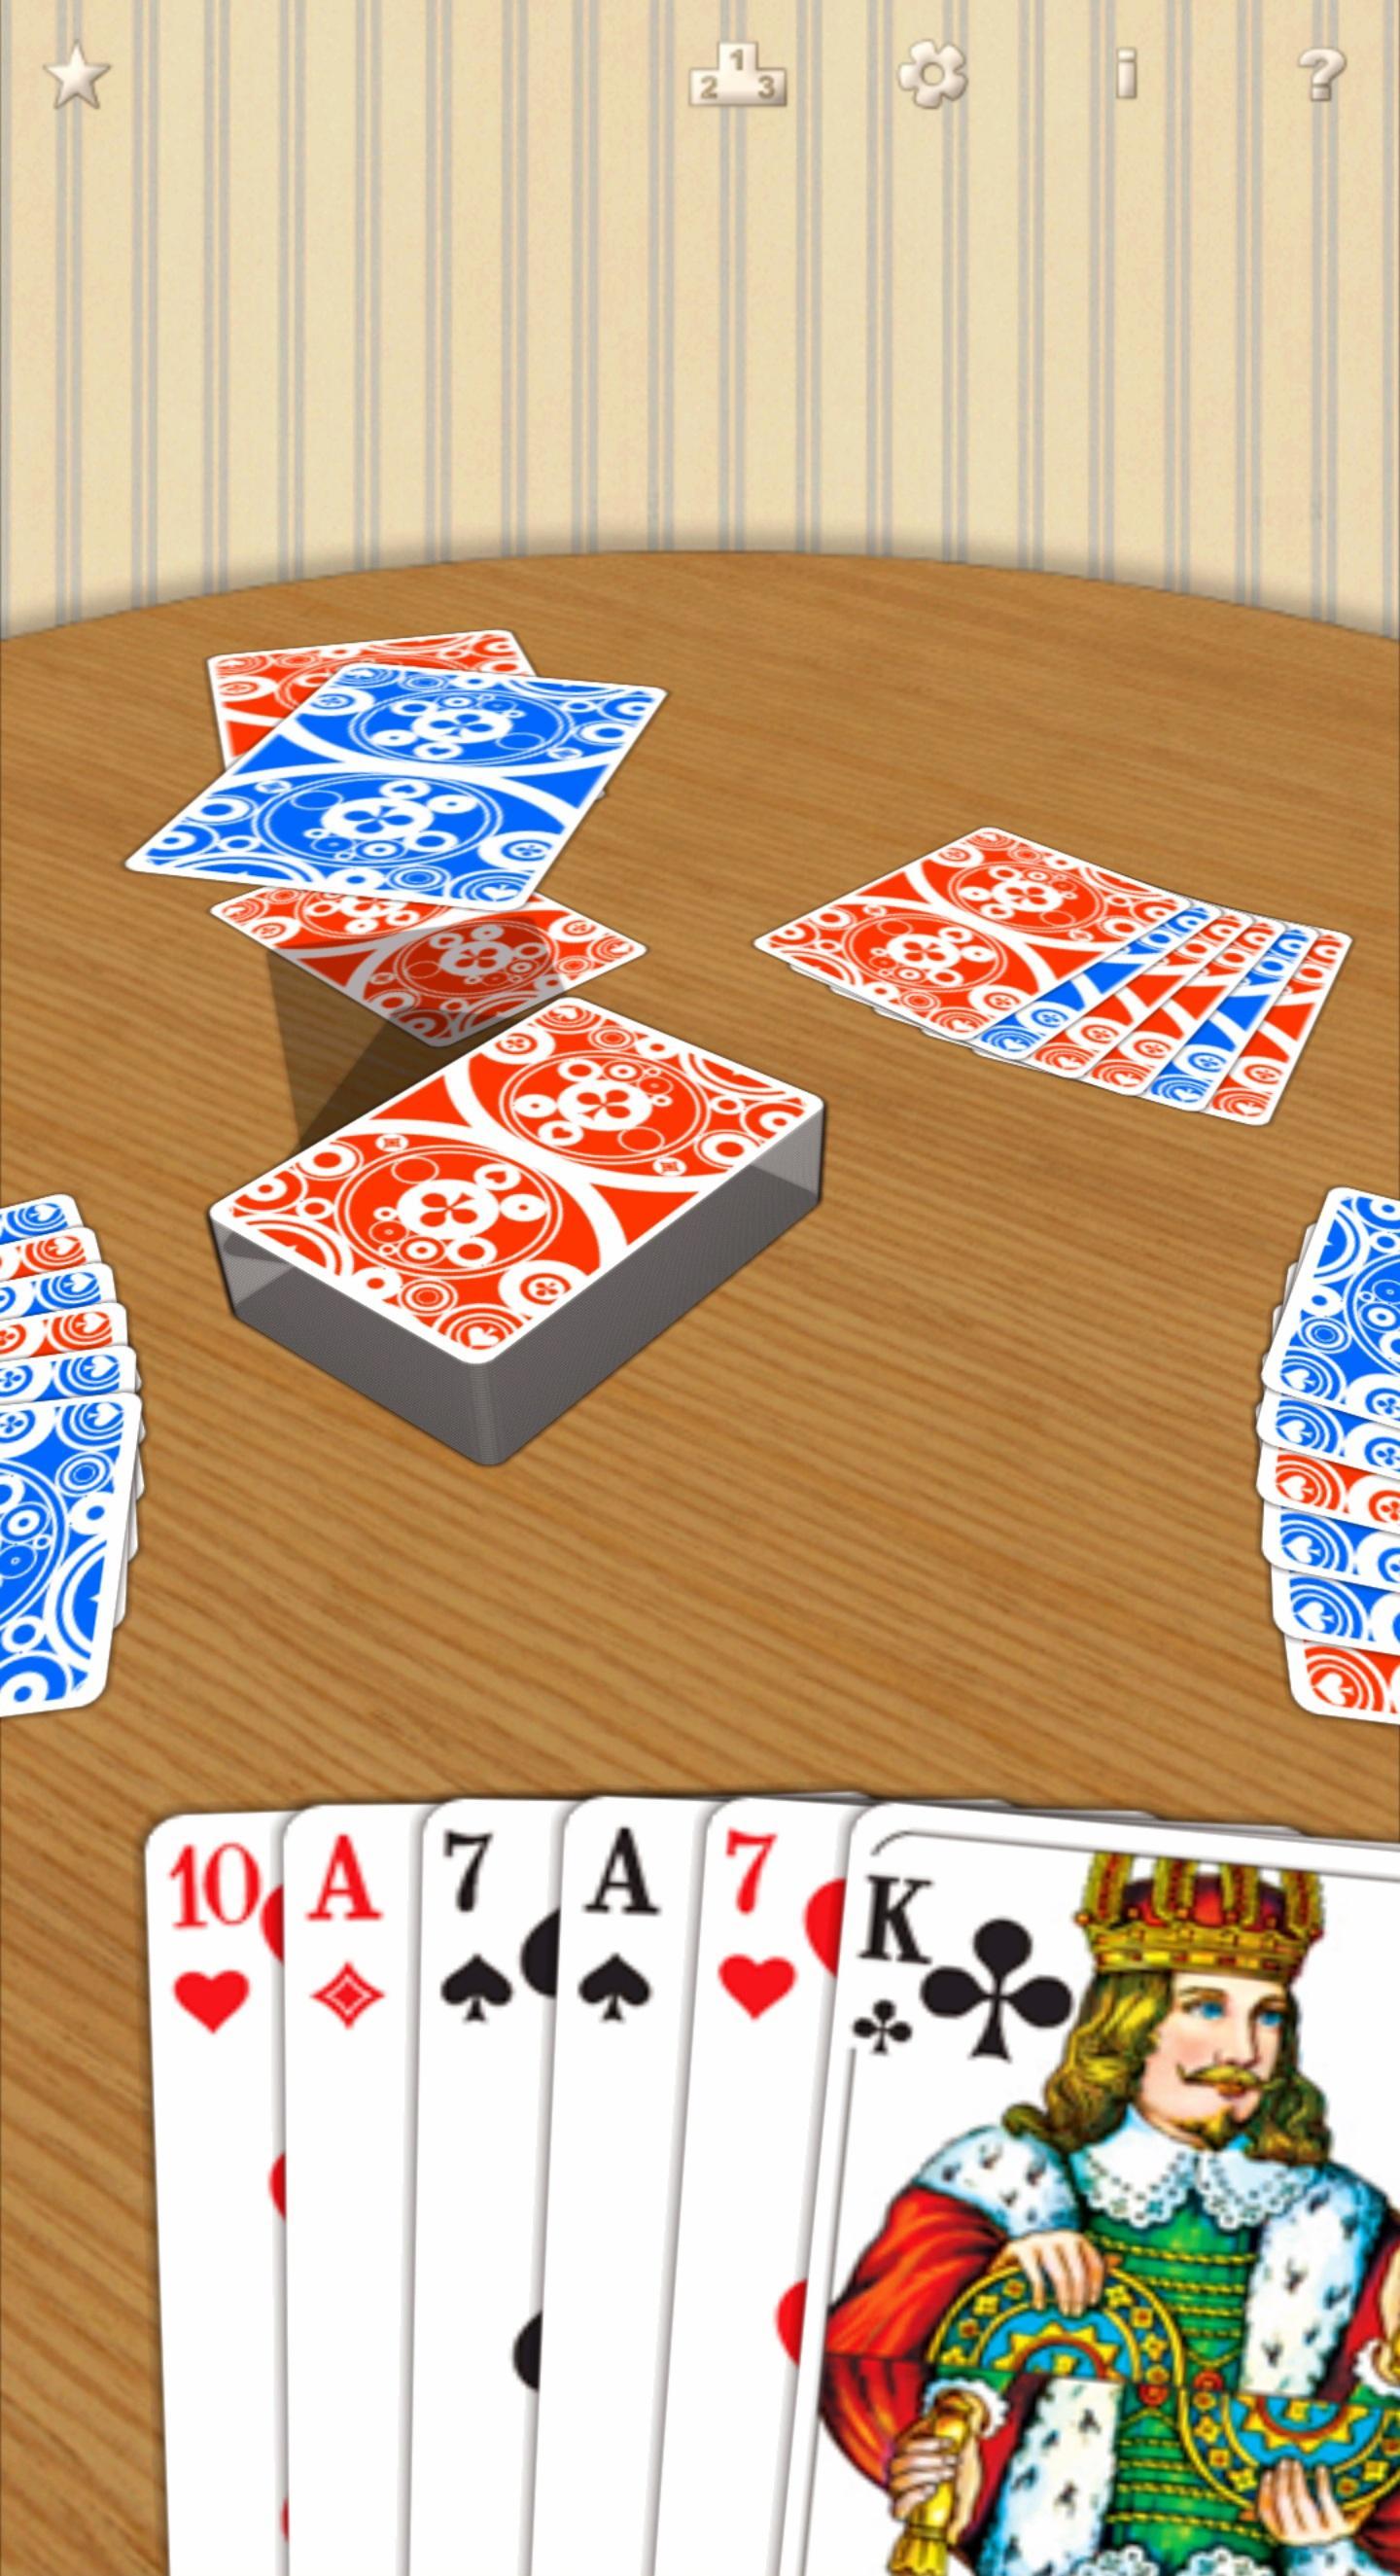 Crazy Eights free card game 1.6.96 Screenshot 15